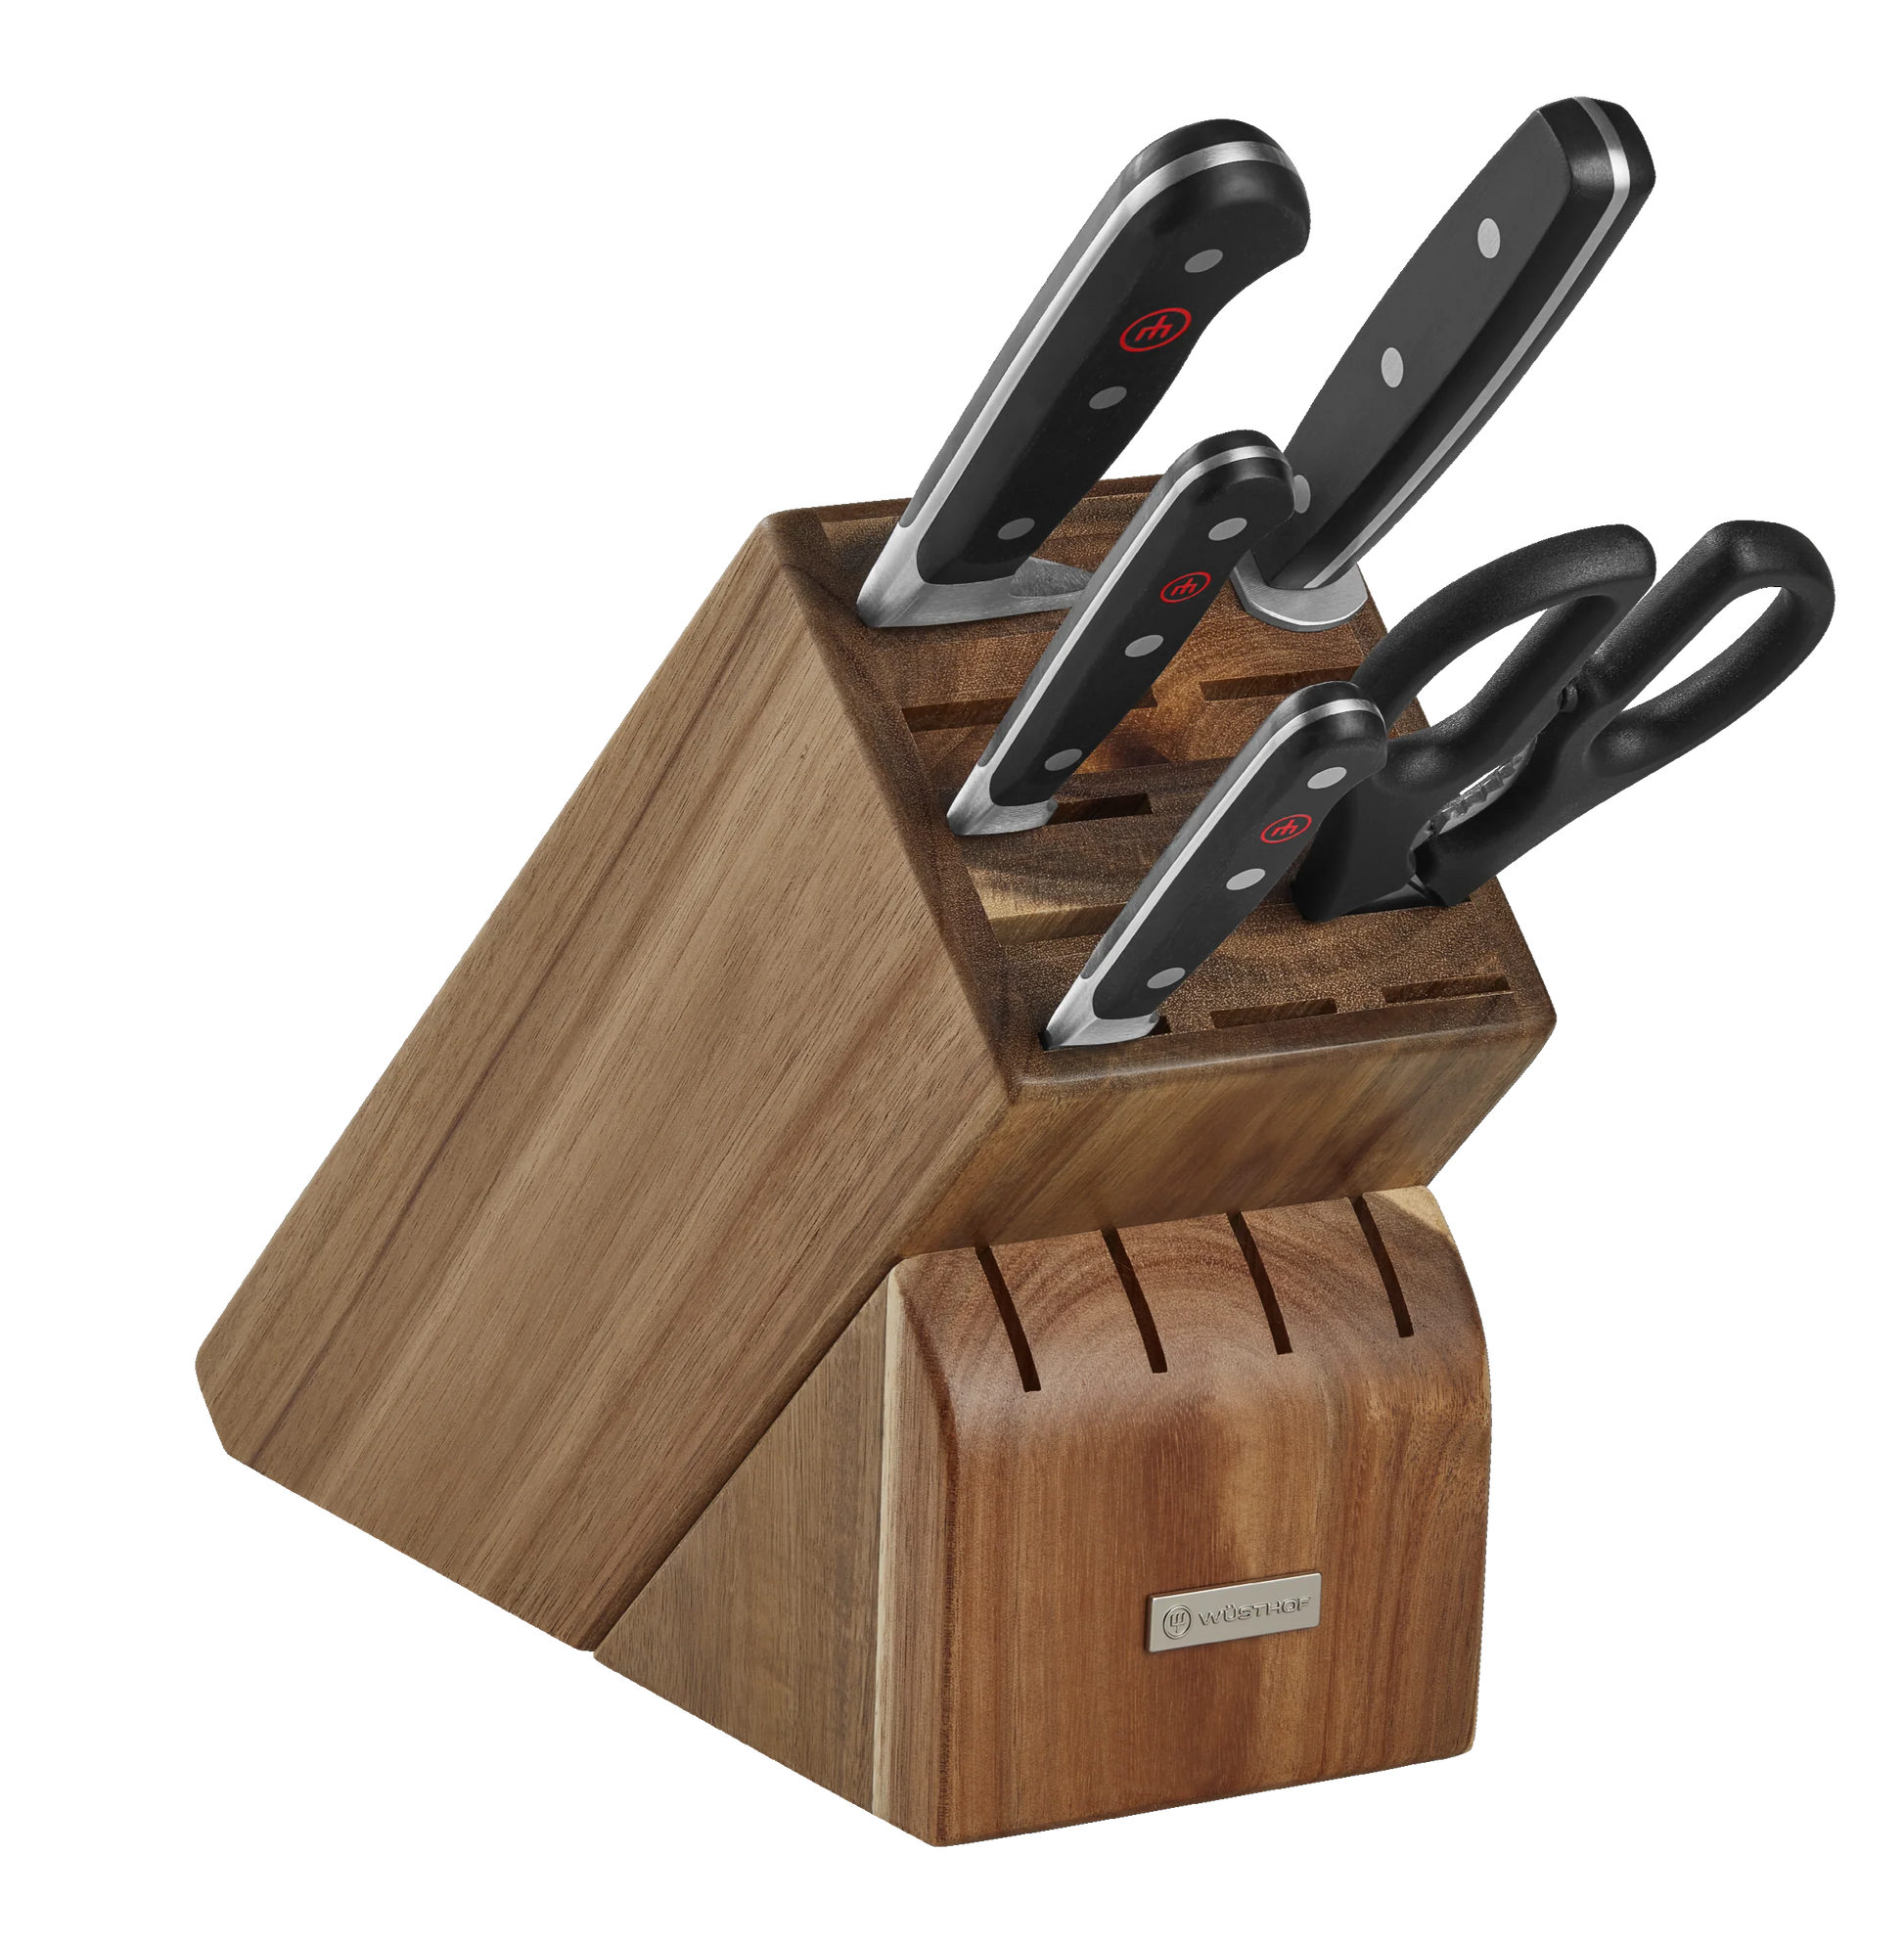 Wusthof Classic Steak Knife Set with Wood Case (6 Piece)